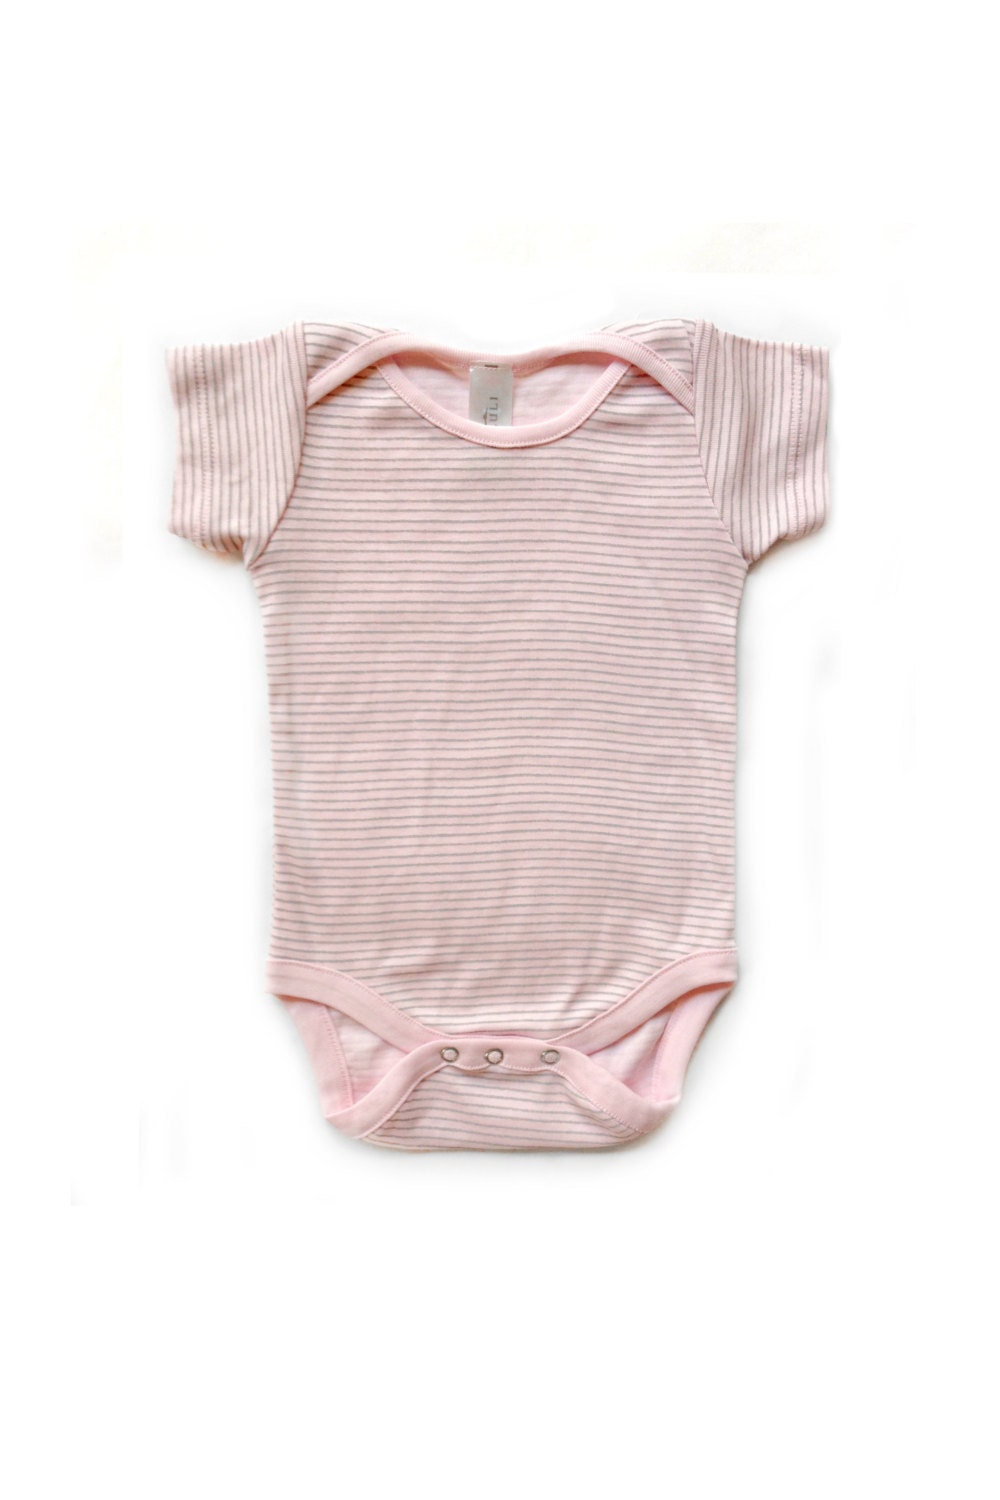 Organic Baby Clothes Organic Newborn Clothes Infant